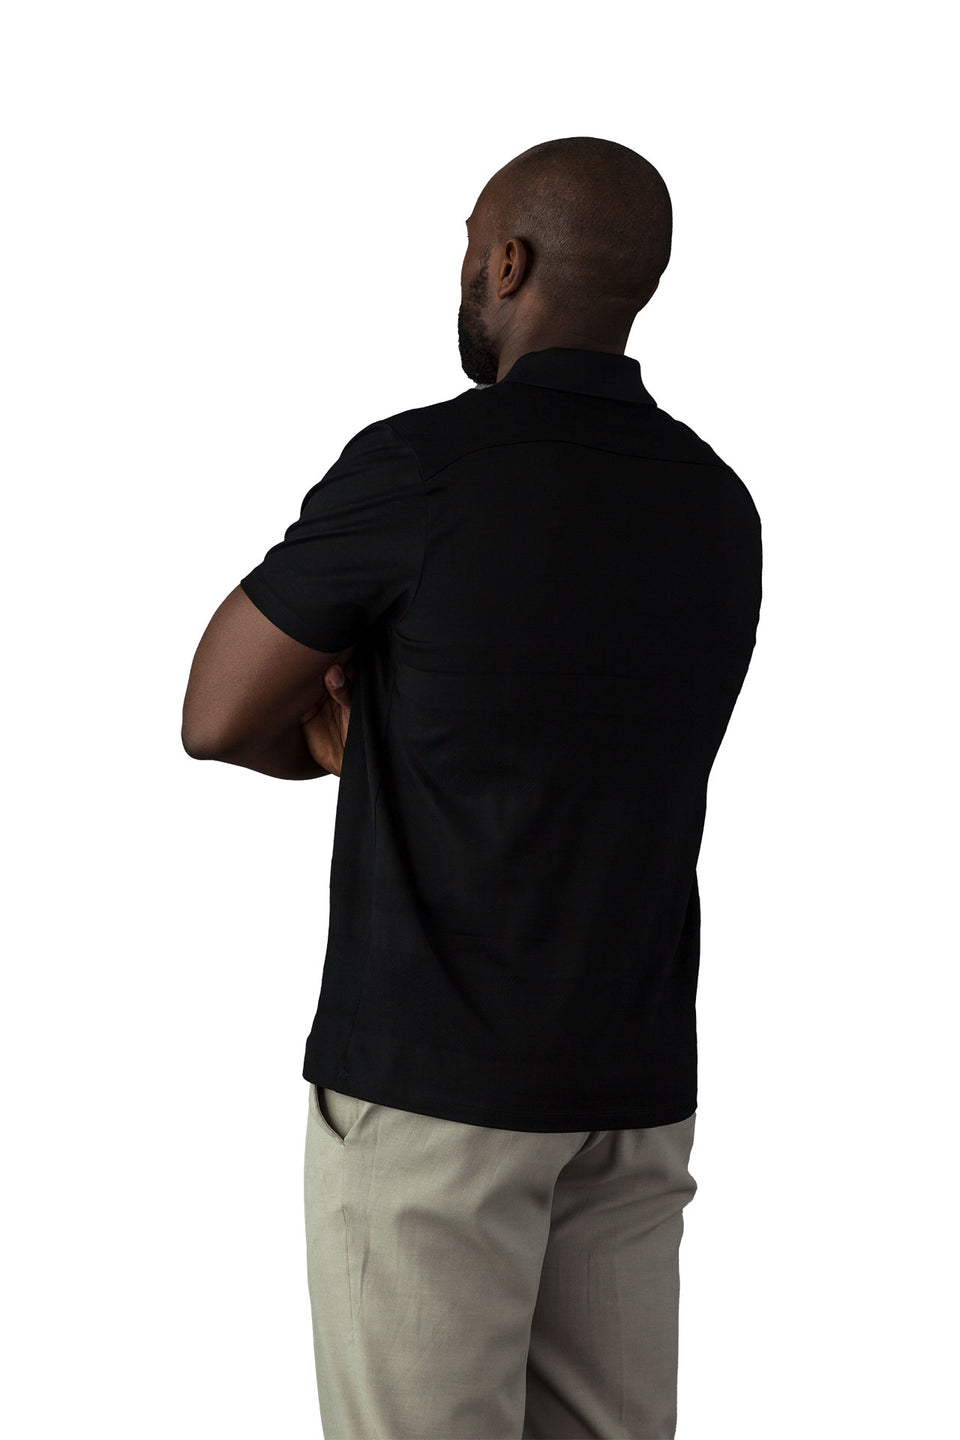 Hugo Boss Slim-fit Black Cotton Polo Shirt - Camden Connaught